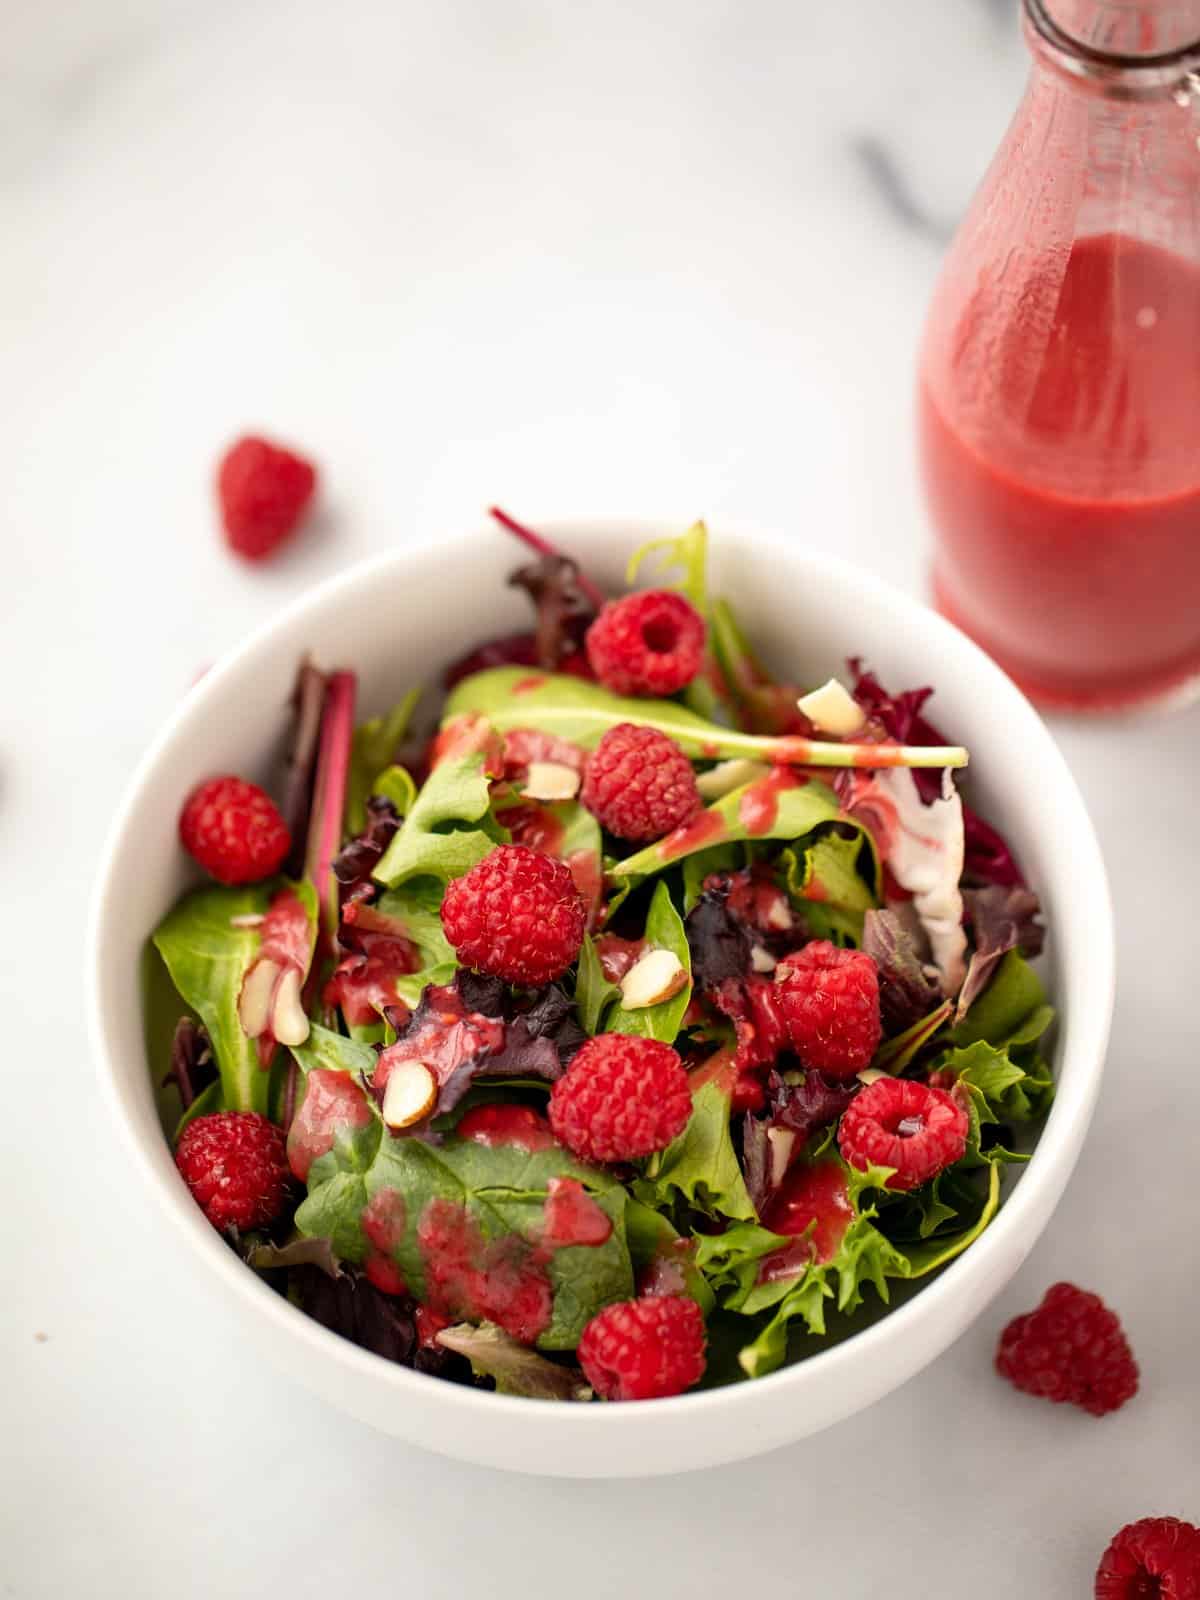 Mixed greens topped with raspberries and fresh raspberry vinaigrette.